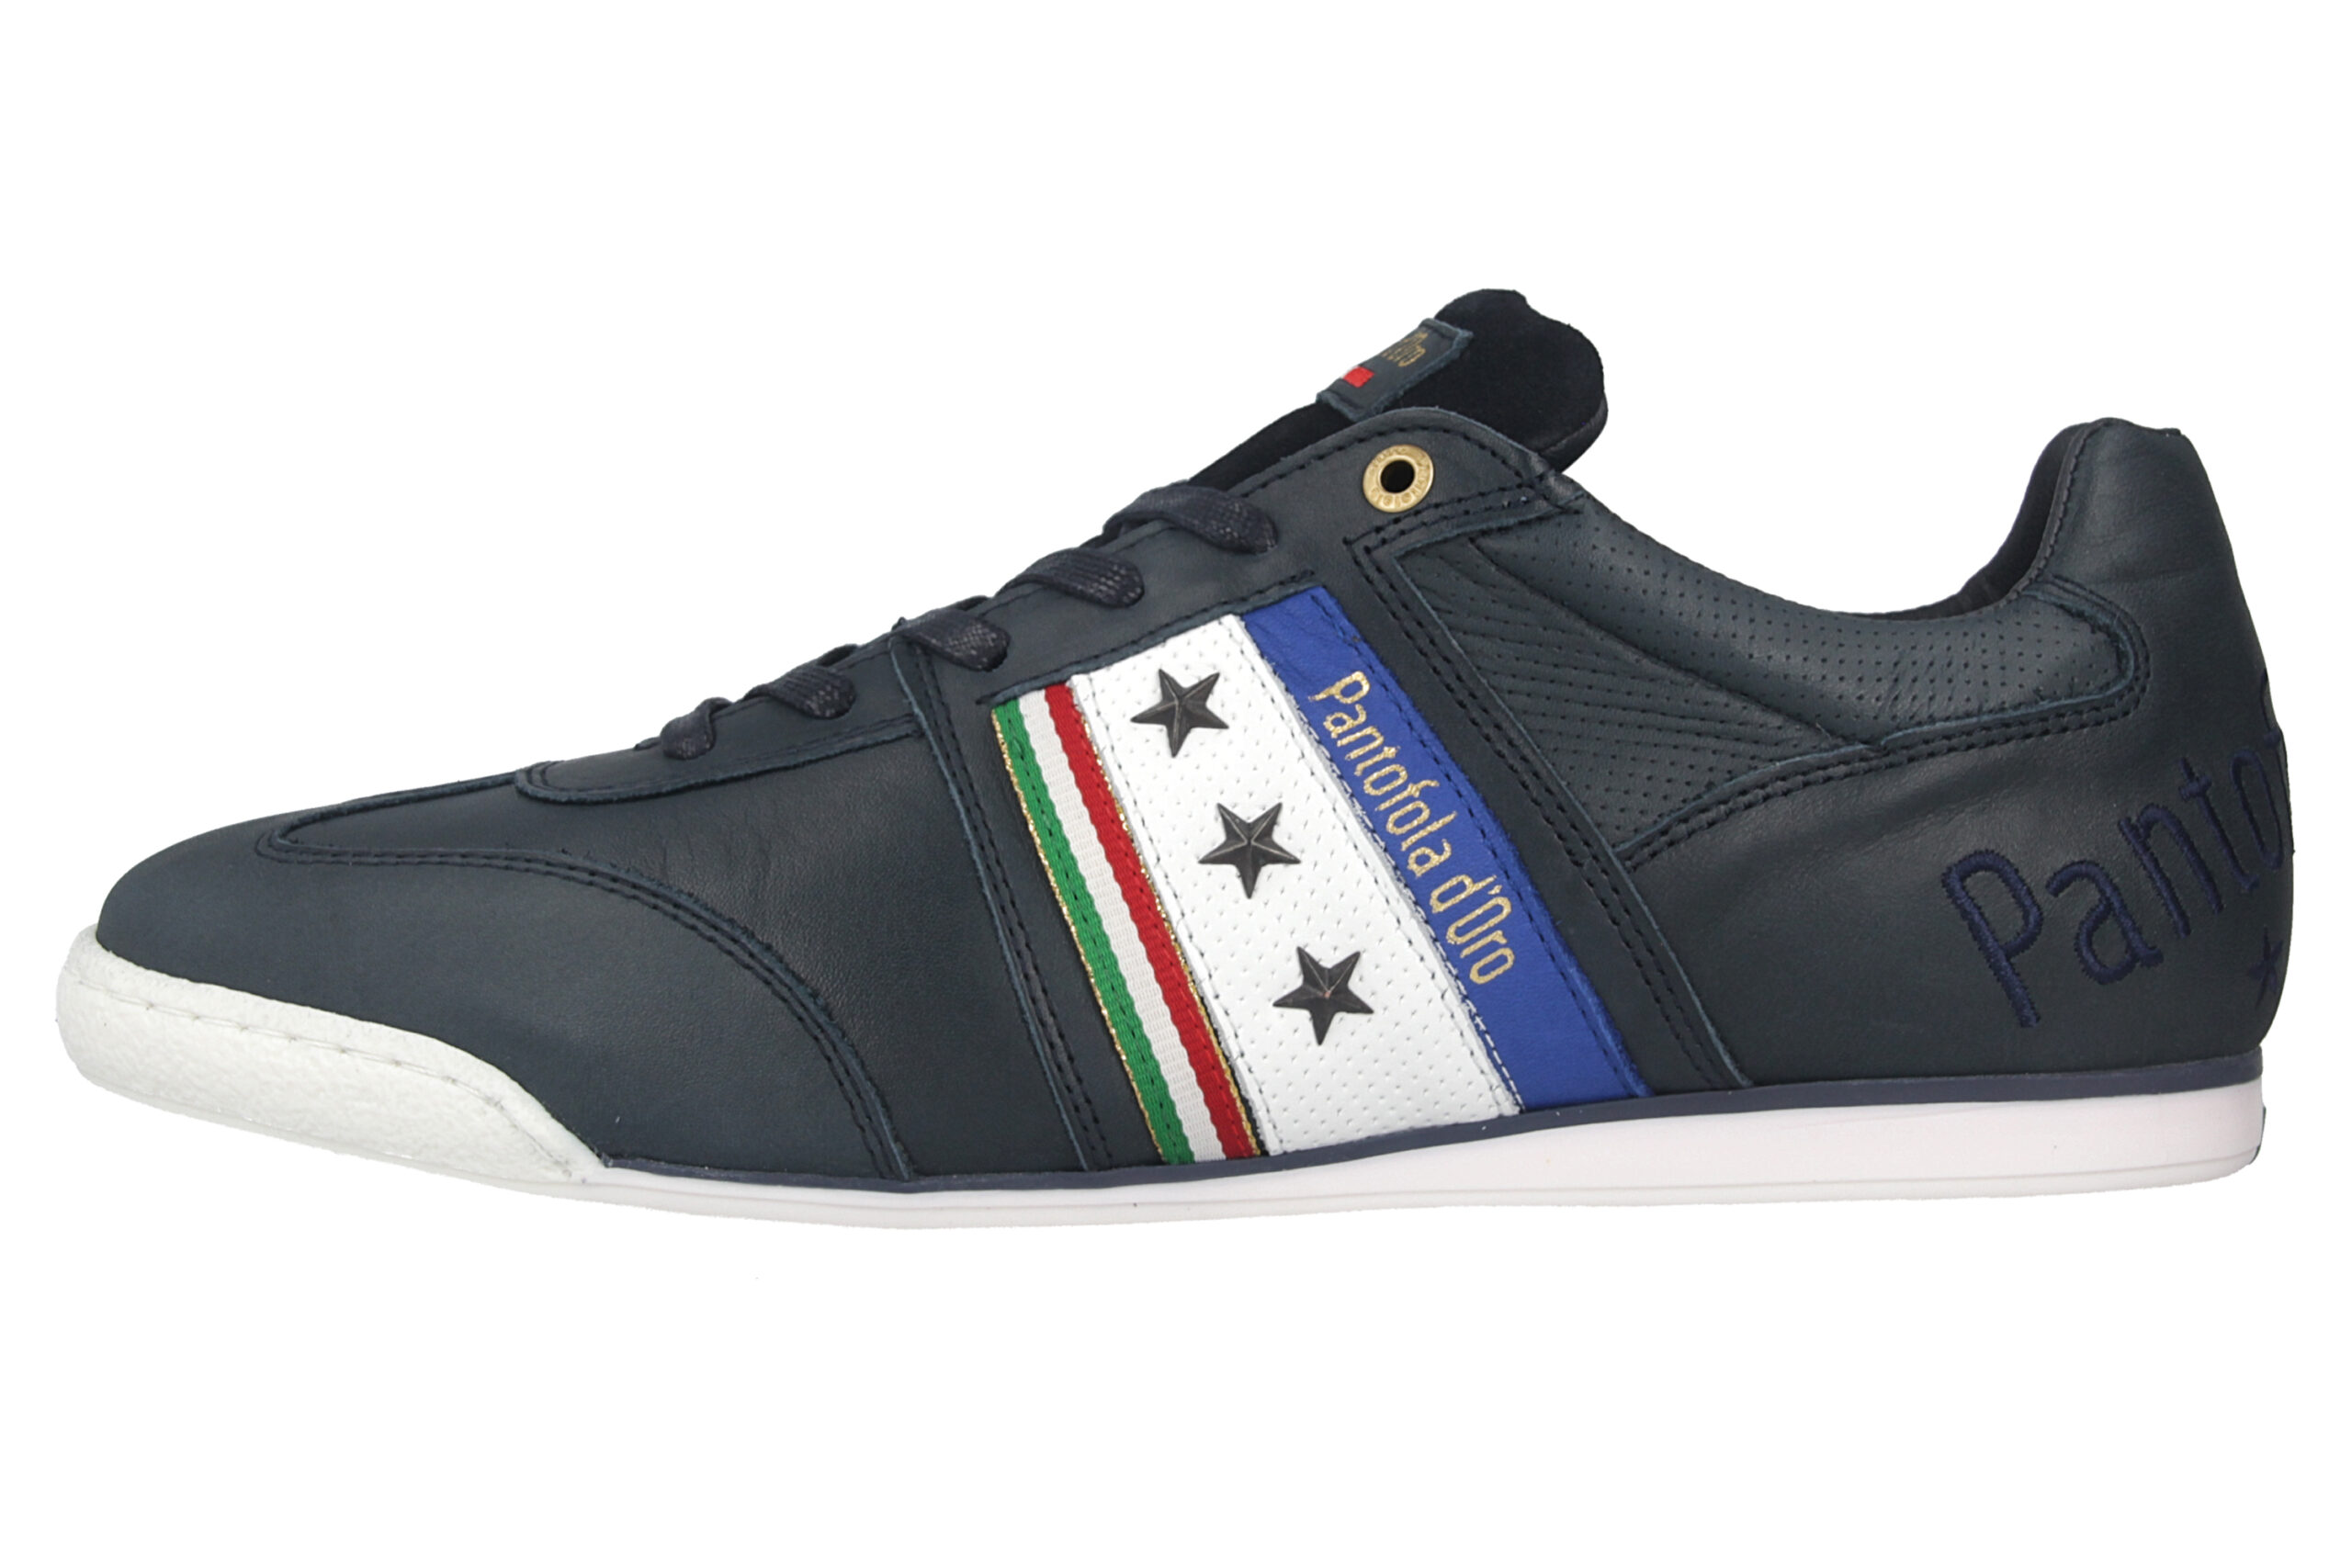 Pantofola d'Oro Imola Romagna Uomo Low Sneaker in Übergrößen Blau 10201040.29Y/10201068.29Y große Herrenschuhe